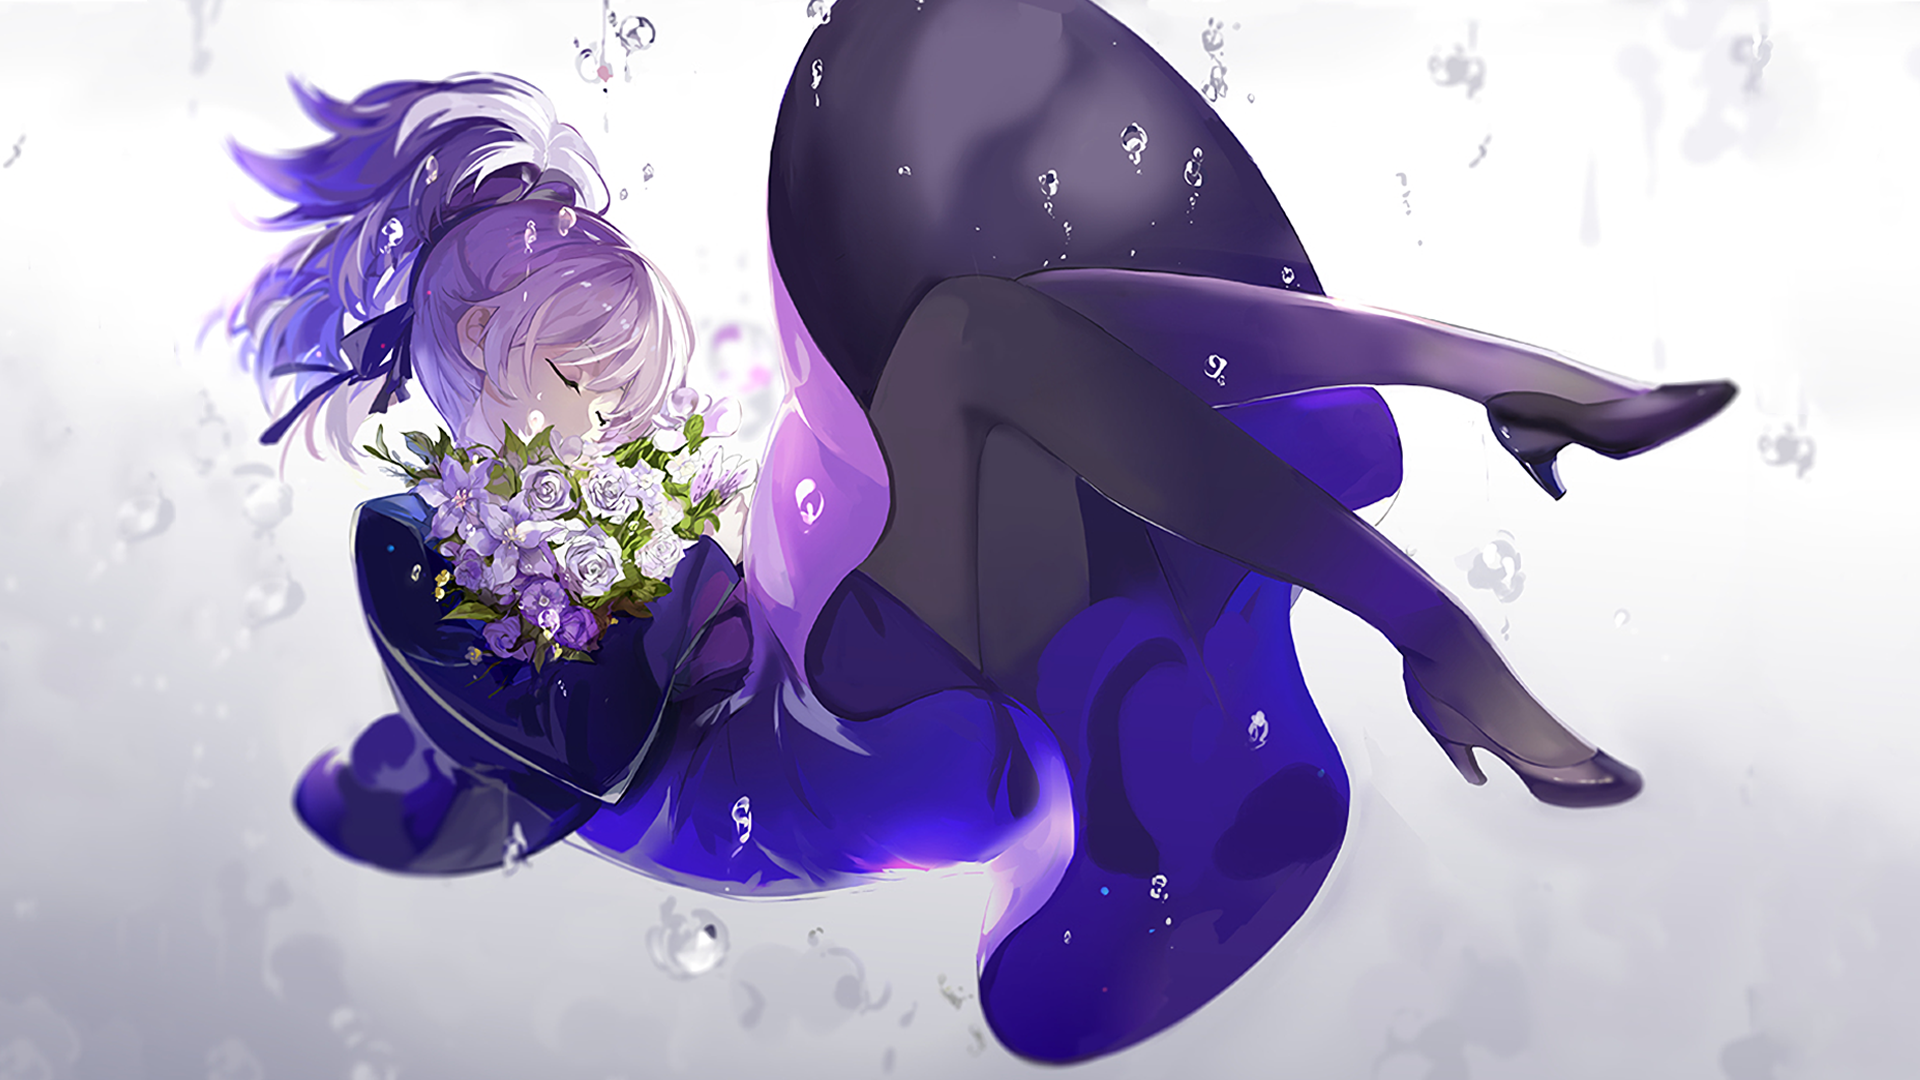 Anime Anime Girls Purple Hair Purple Dresses Black Heels Heels Flowers Bouquets Purple Darker Than B 1920x1080